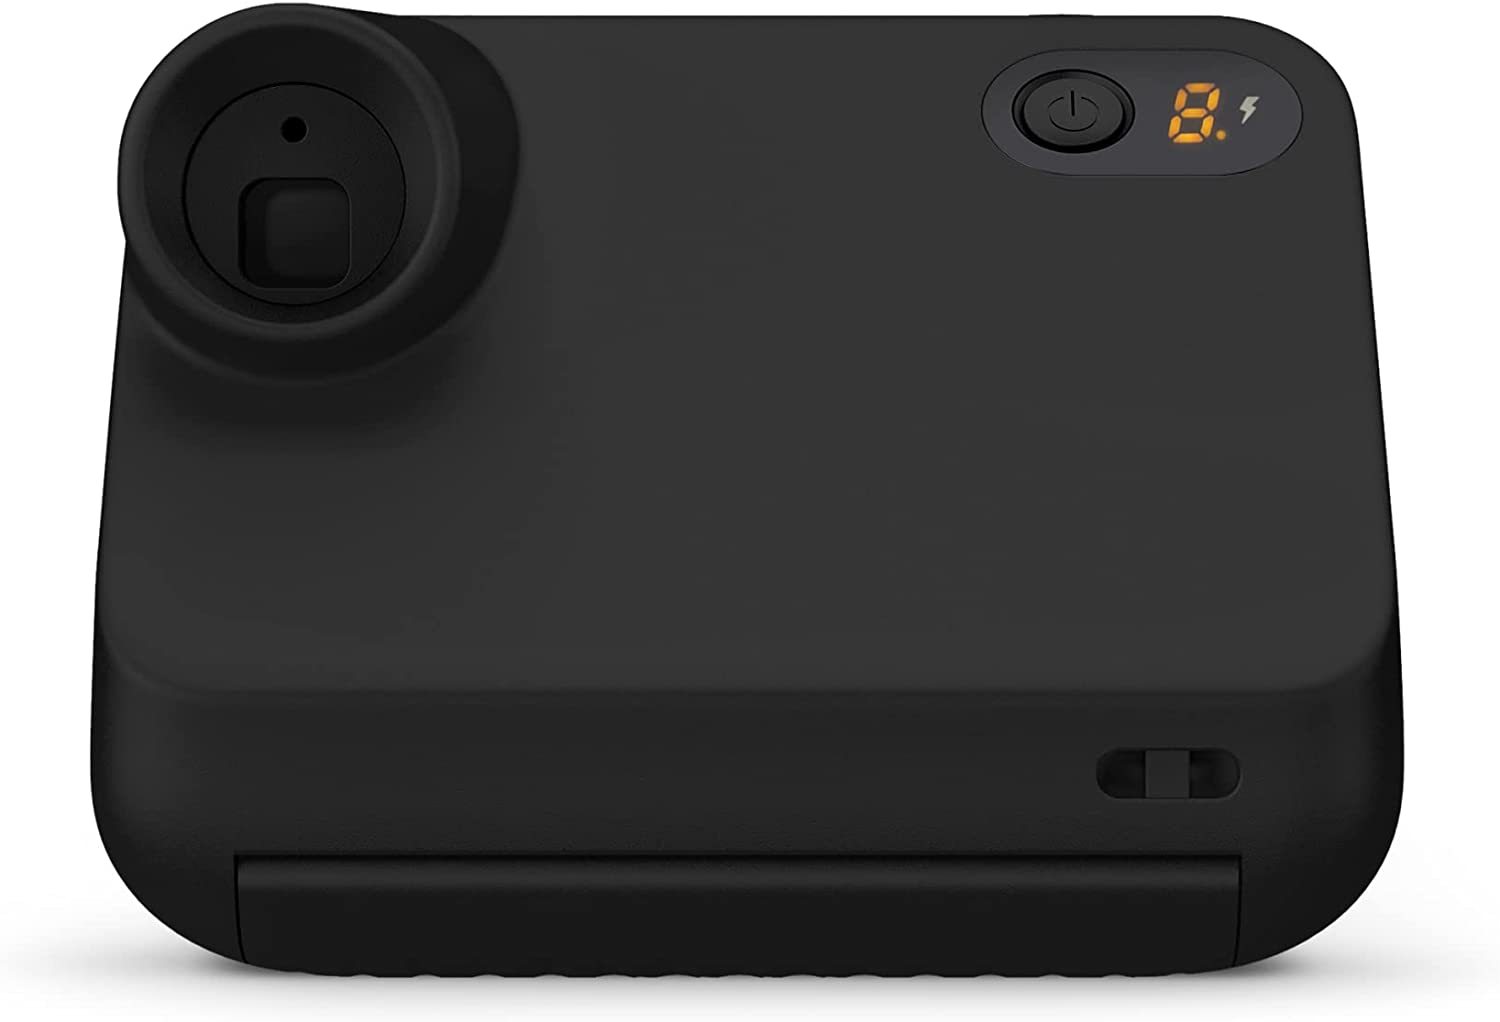  Polaroid Go Instant Mini Camera - Black (9070) - Only  Compatible with Polaroid Go Film : Electronics